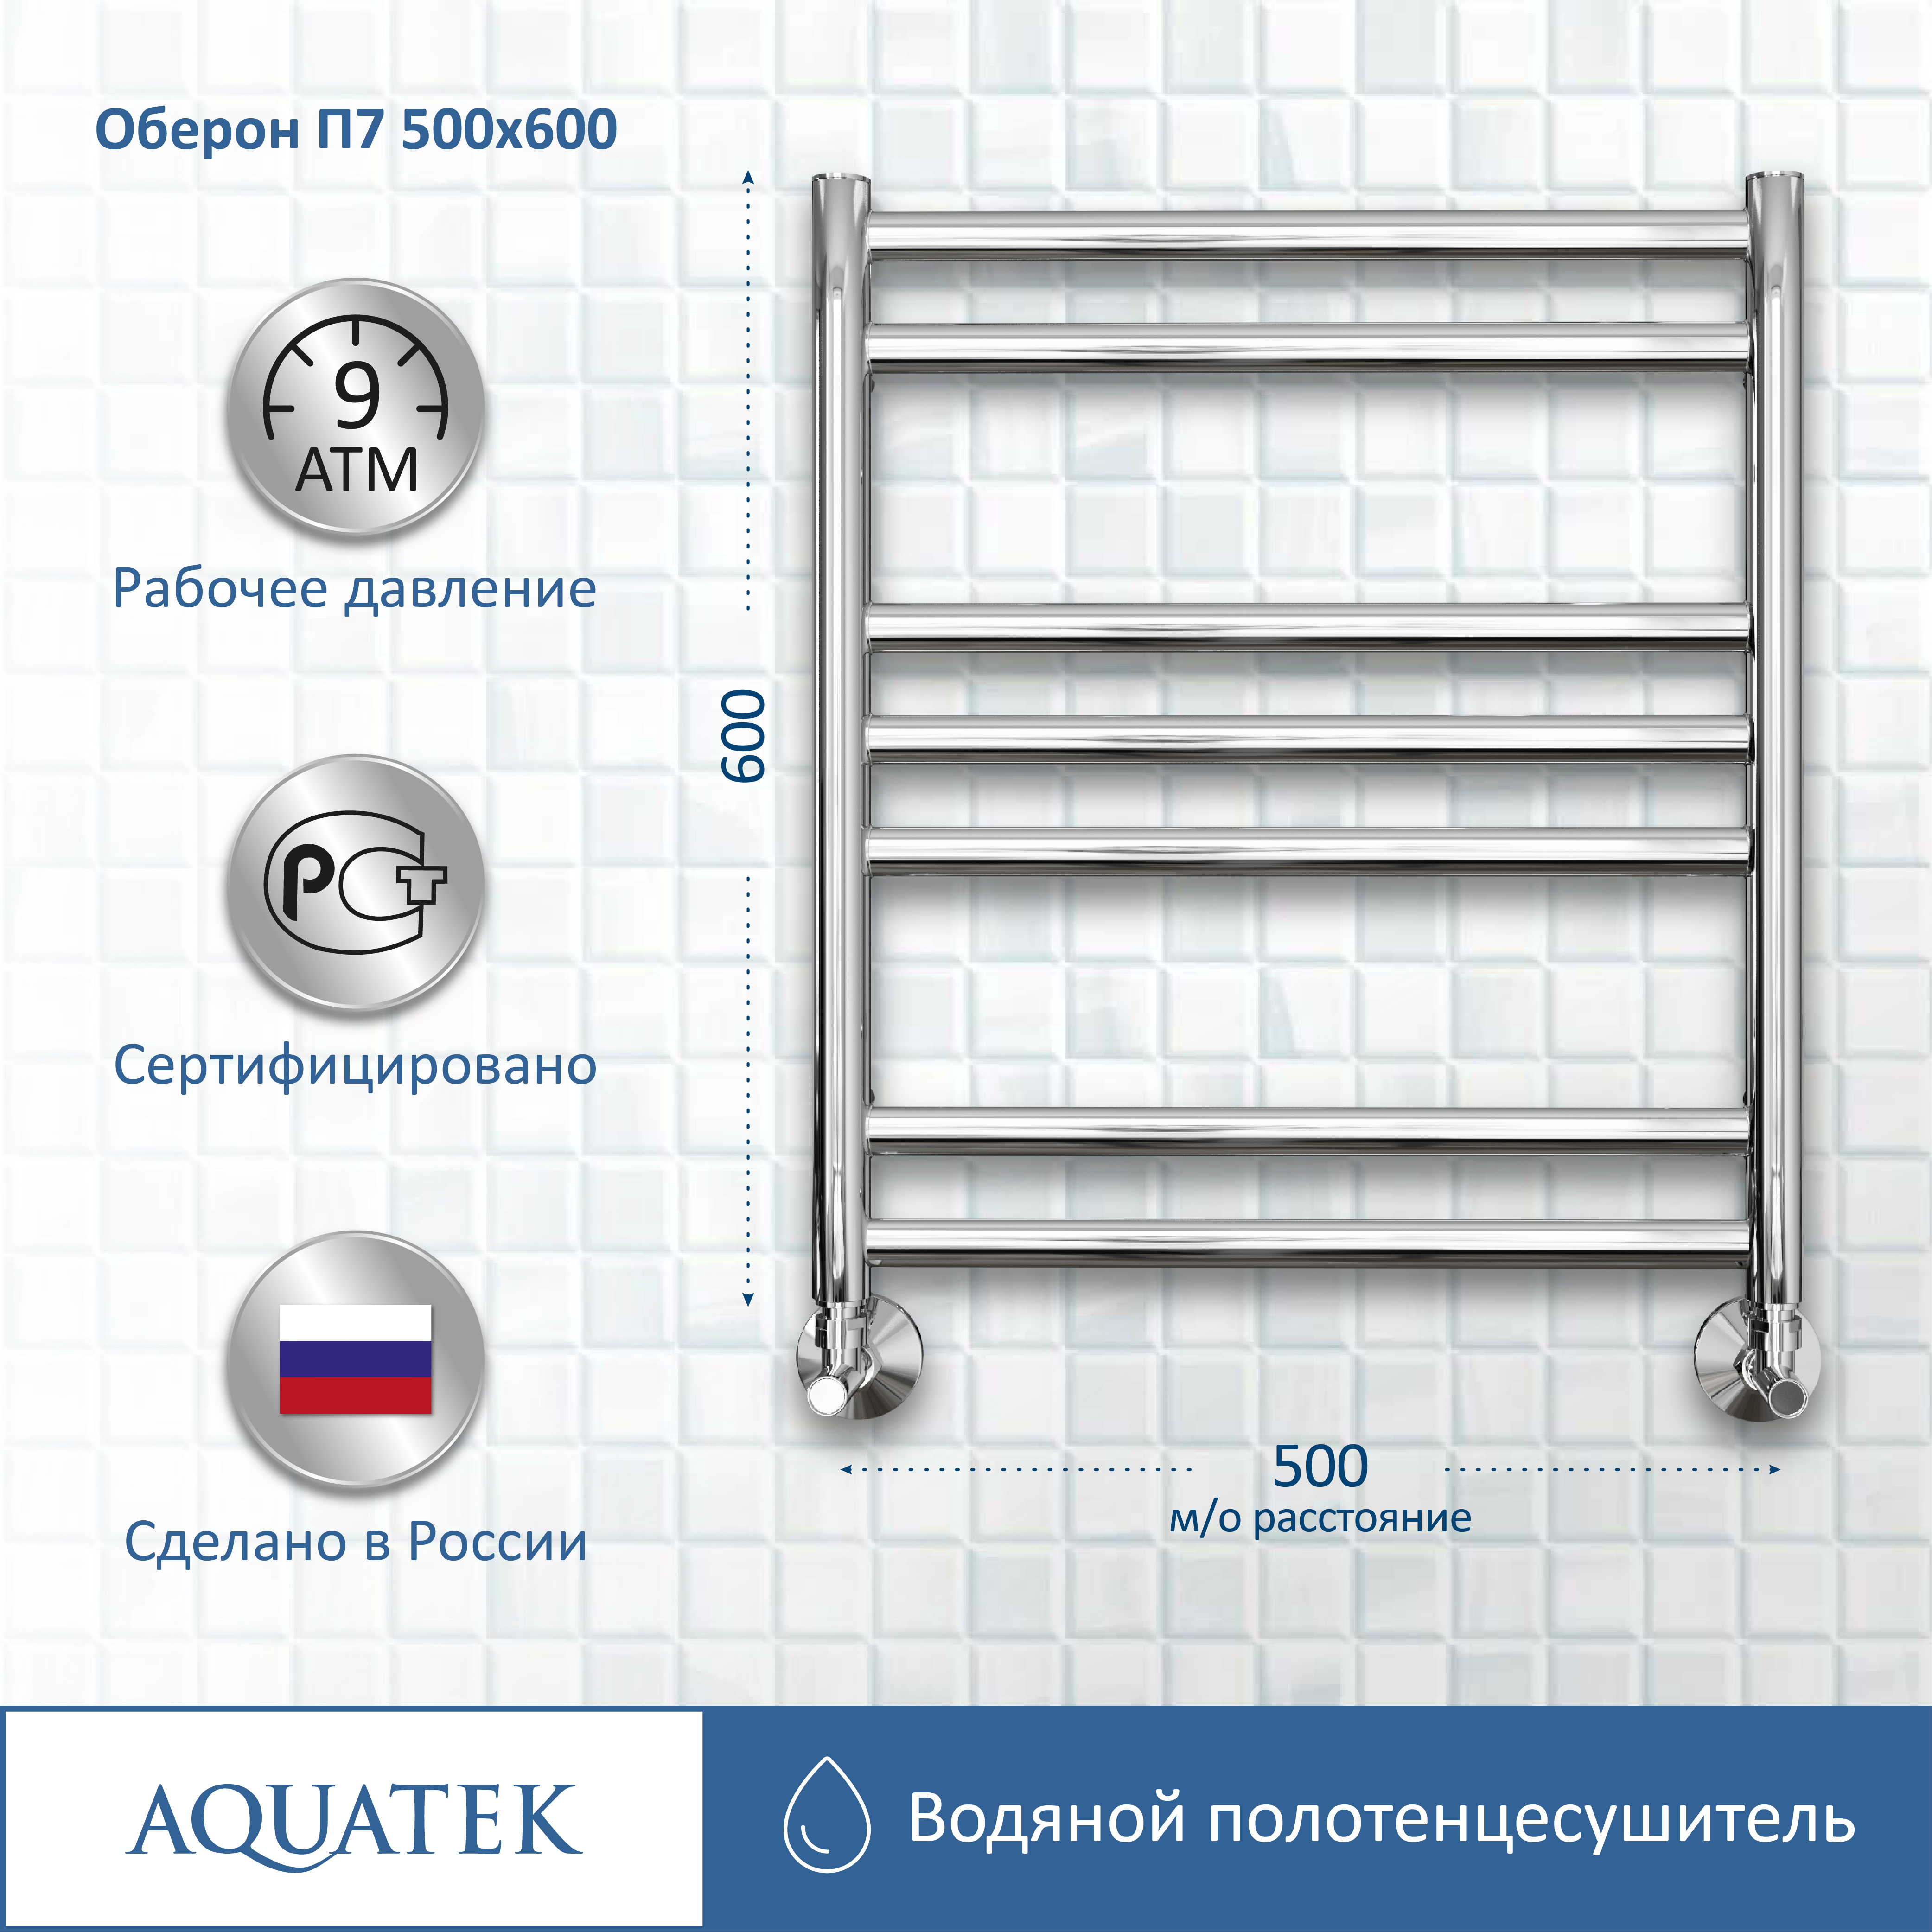 Полотенцесушитель водяной Aquatek Оберон П7 500х600 AQ RO0760CH - 11